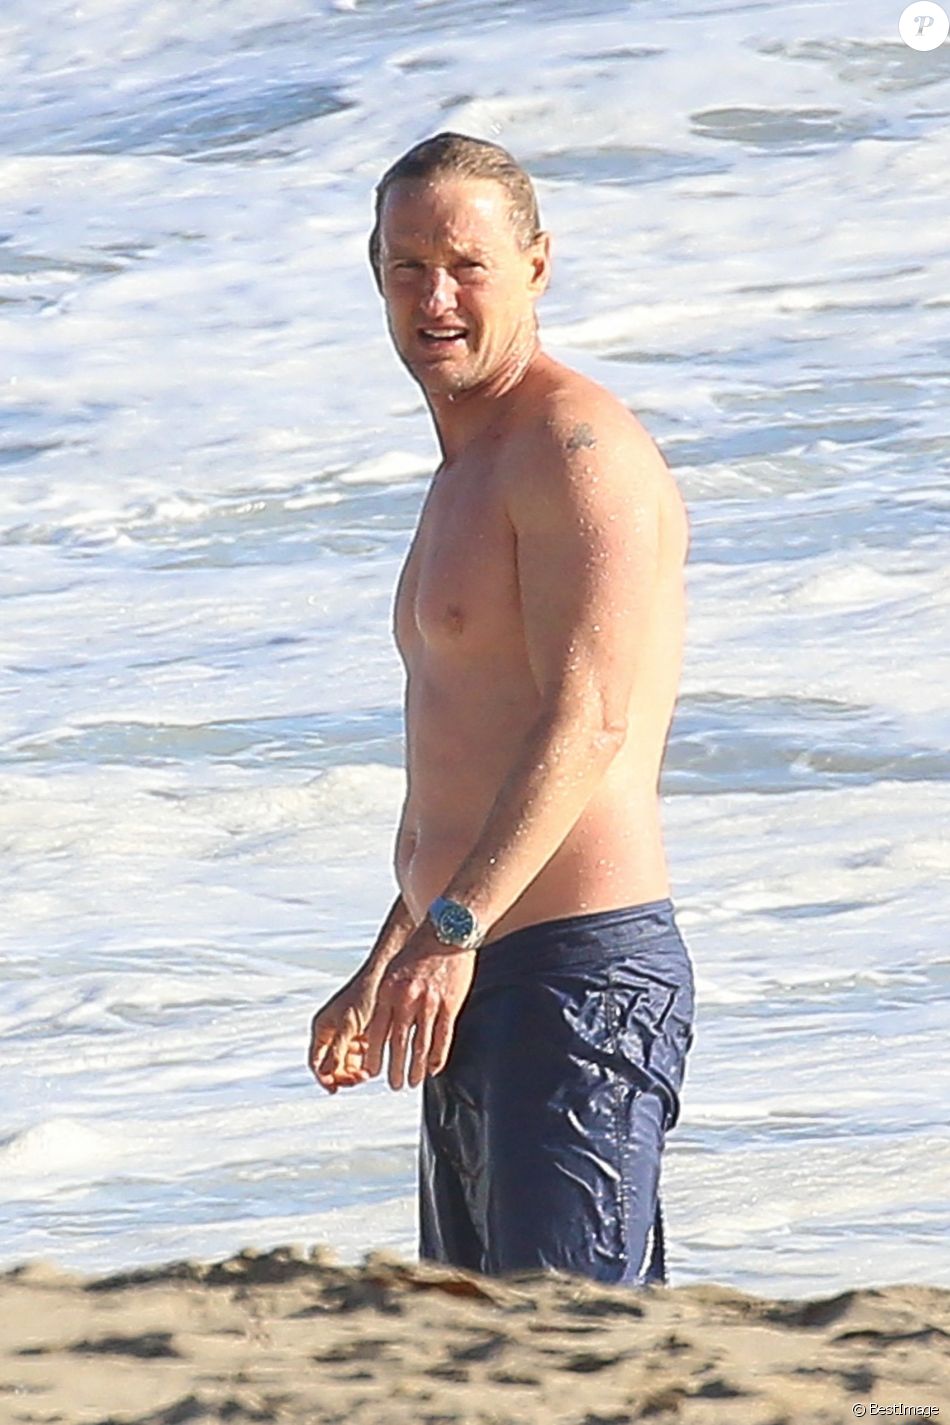 Exclusif - Owen Wilson se baigne à Malibu le 19 mai 2020.